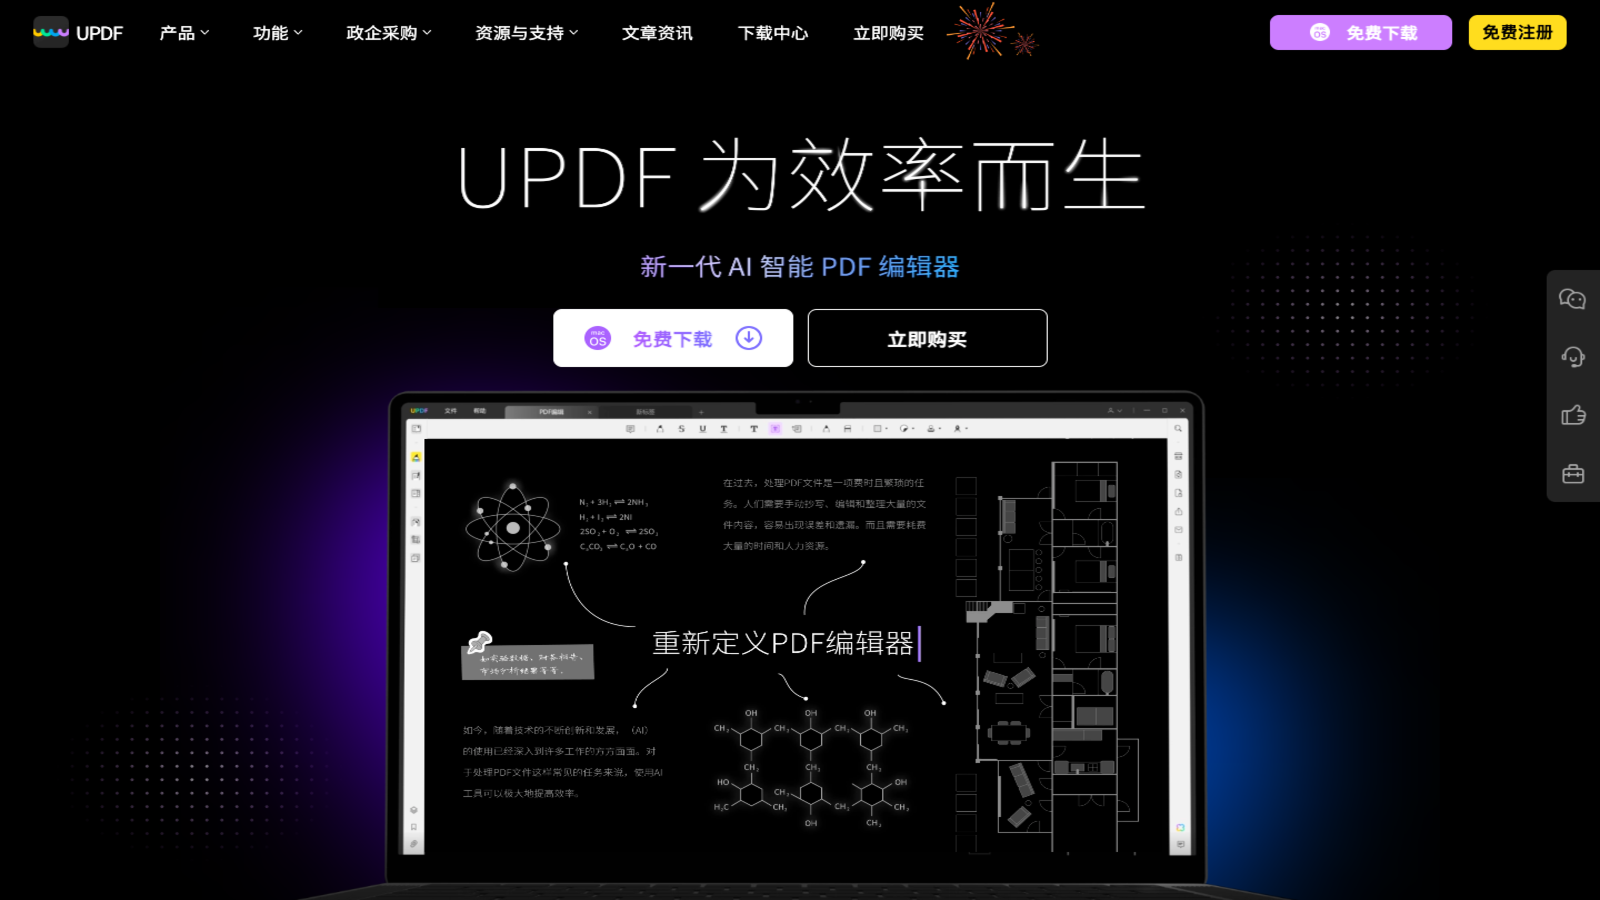 UPDF - 智能PDF编辑器